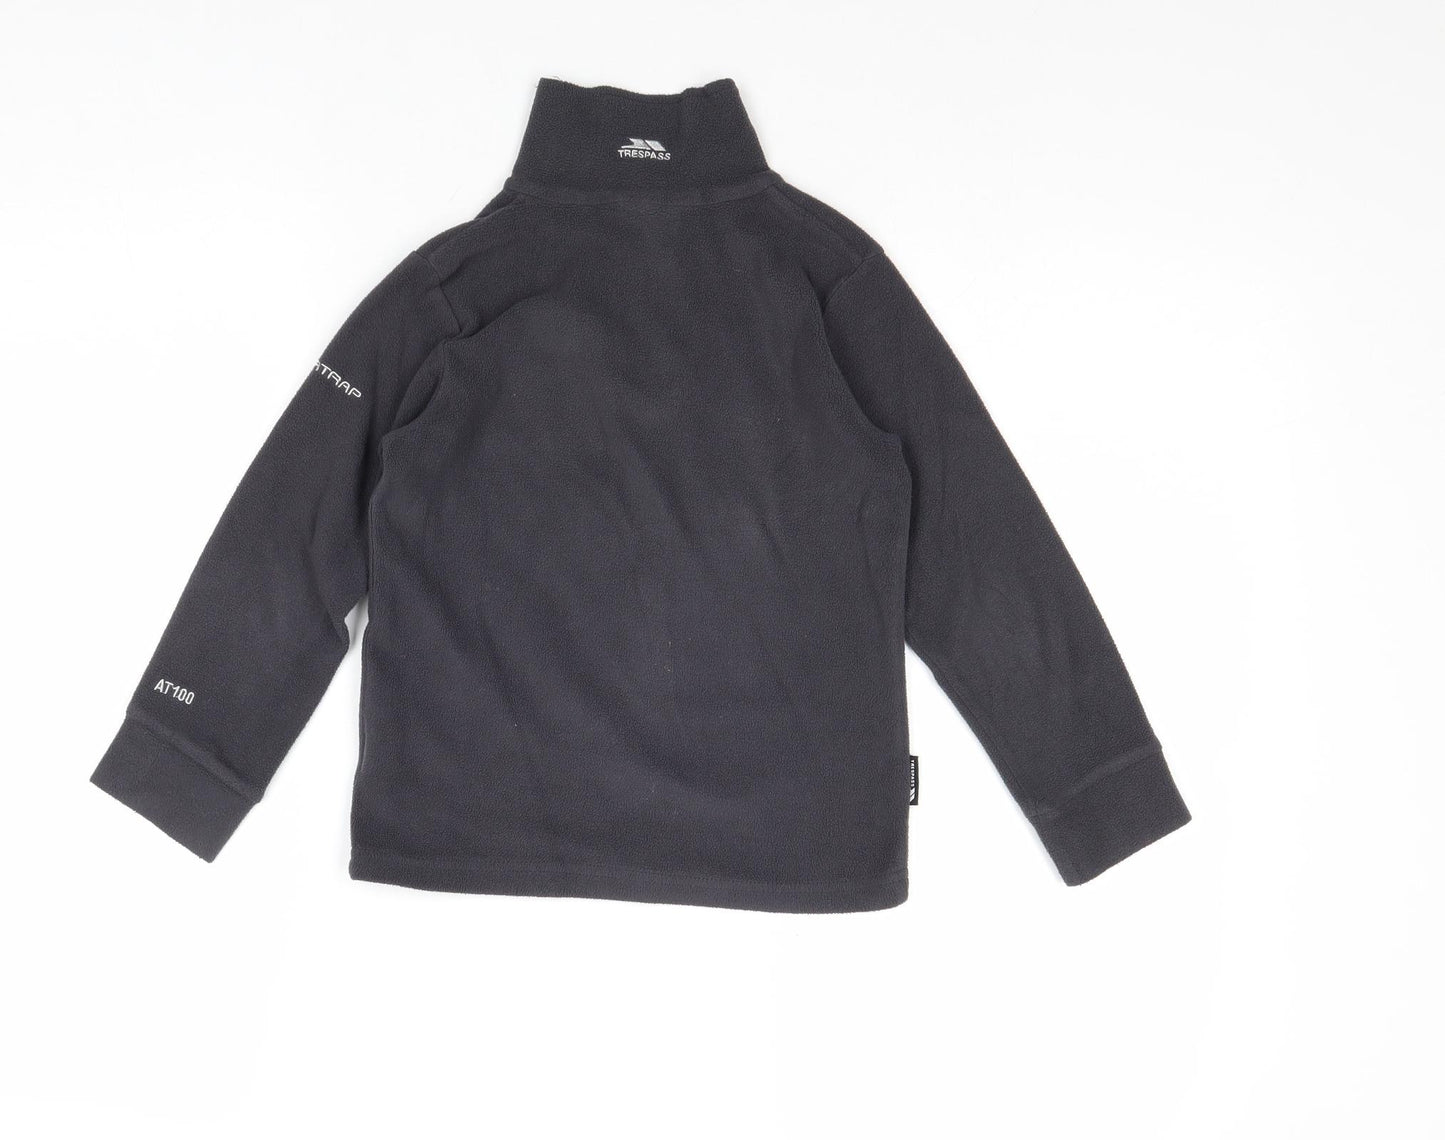 Trespass Boys Grey Polyester Pullover Sweatshirt Size 5-6 Years Zip